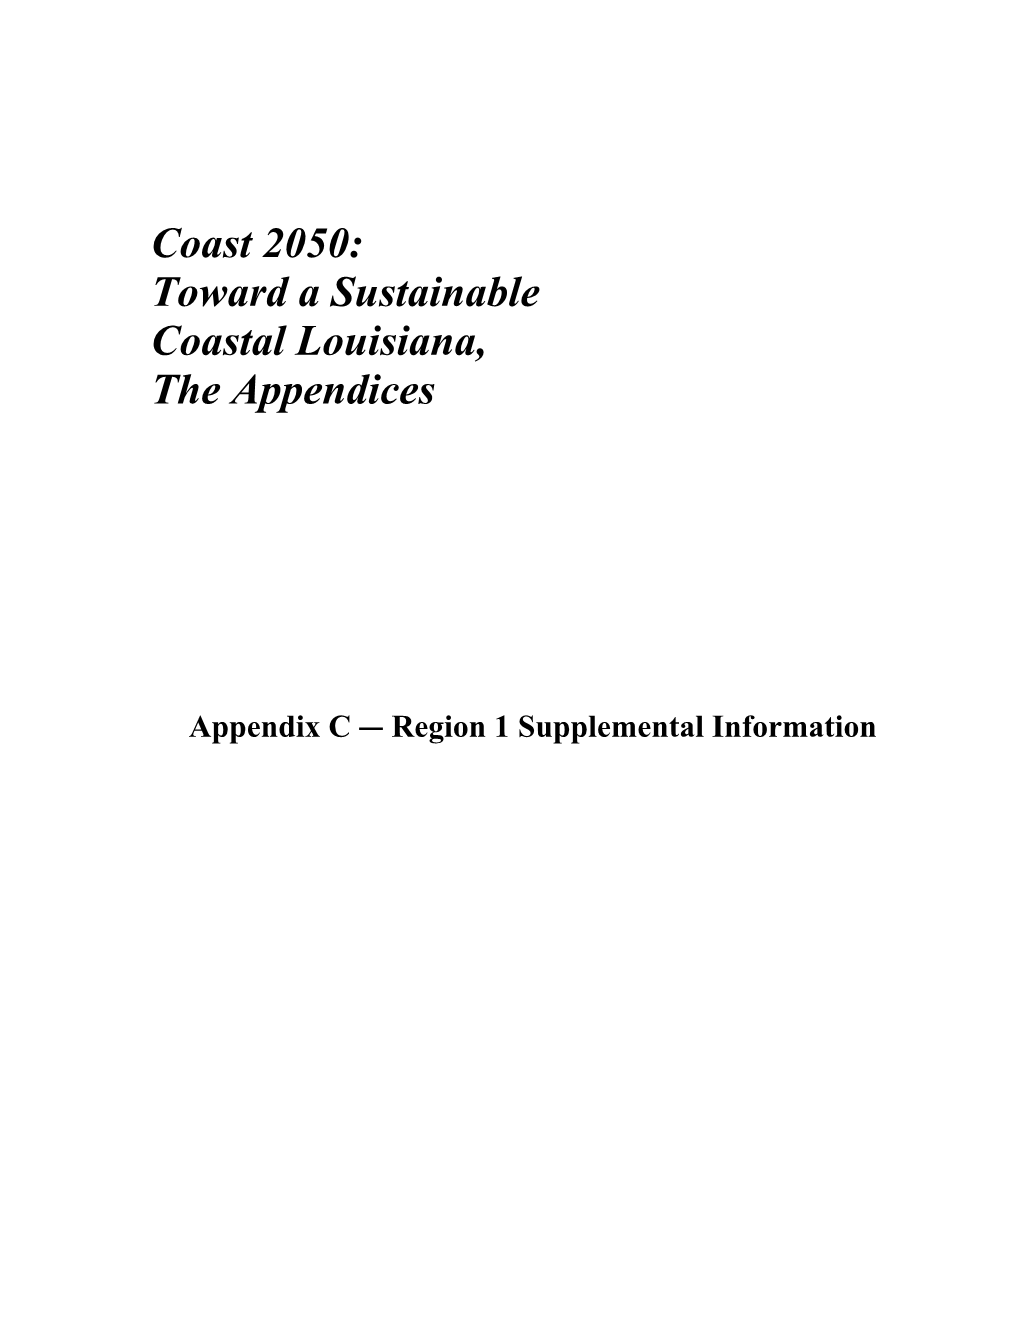 Coast 2050: Toward a Sustainable Coastal Louisiana, the Appendices